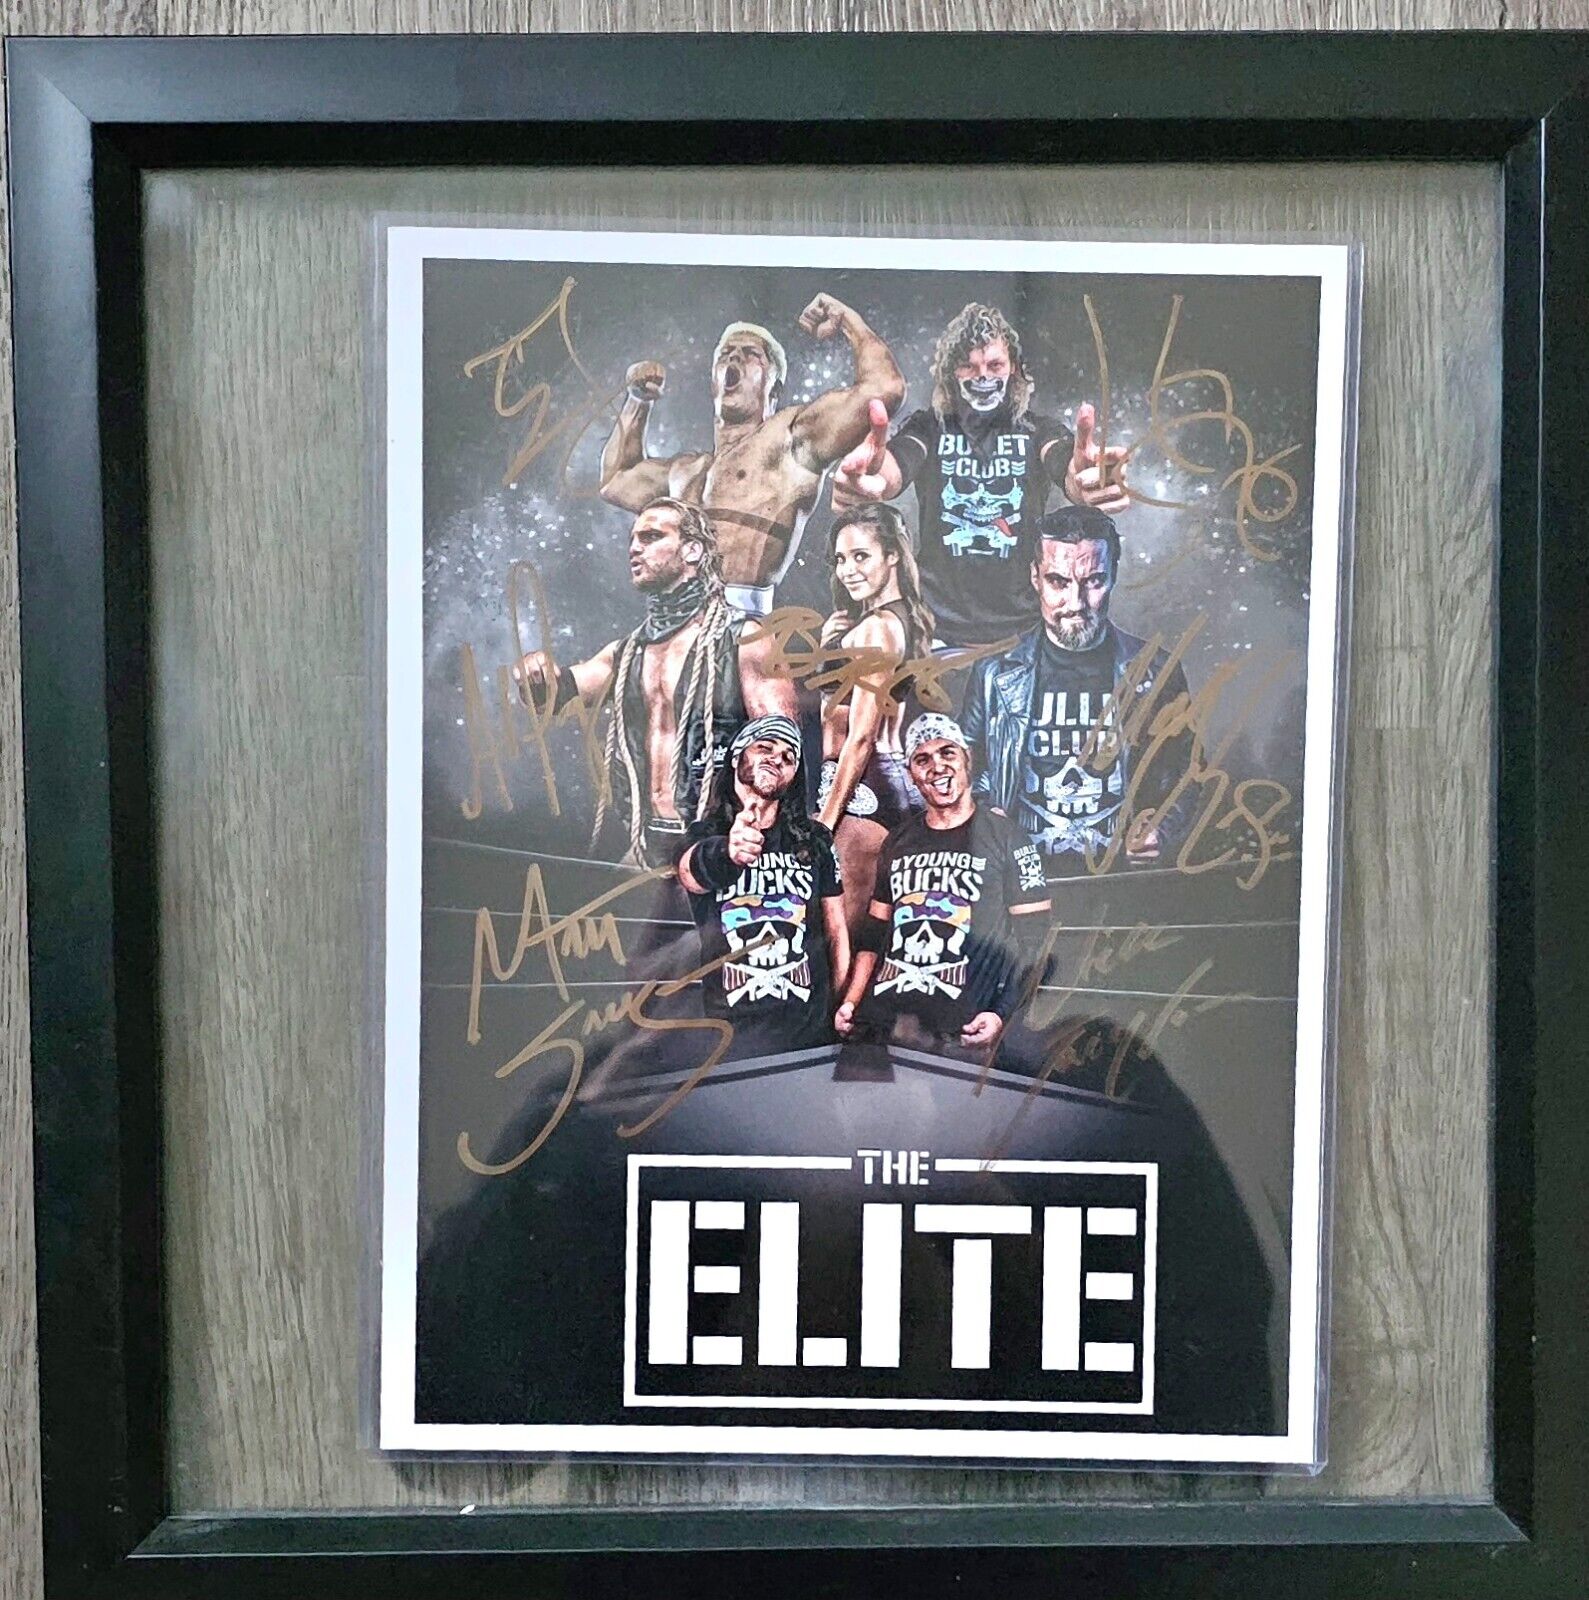 Like New Very Rare Autographed ROH/NJPW/AEW Picture - The Elite COA - Free Frame